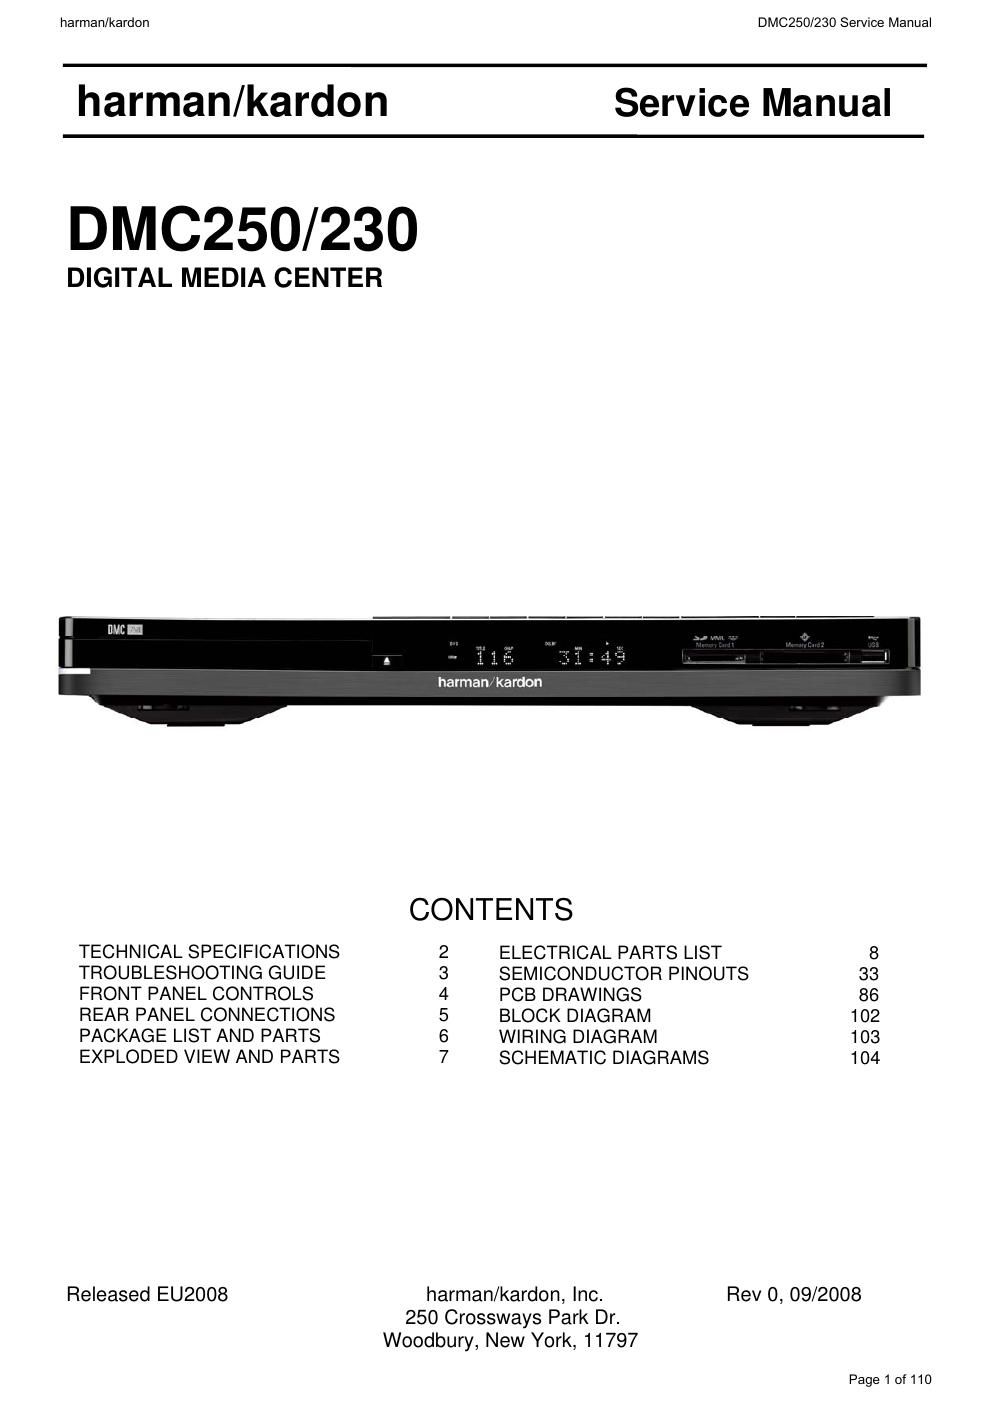 harman kardon dmc 230 service manual